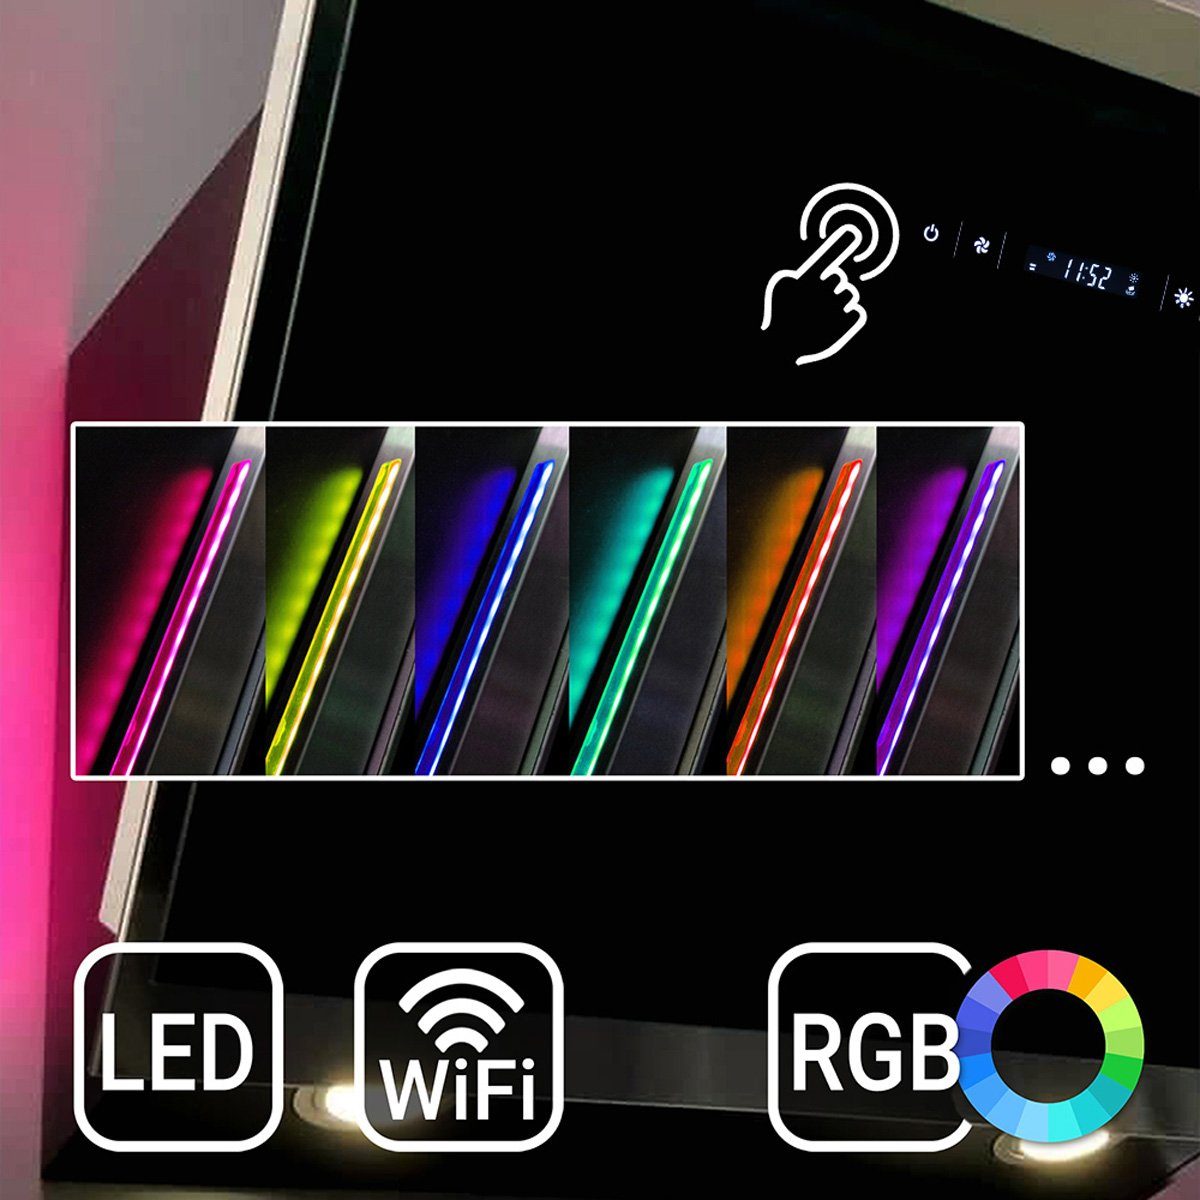 60cm Dunstabzugshaube Glas / KKT / 60cm / KOLBE Leise WiFi-App Smarte RGBW Edelstahl Kopffreihaube / Ambientebeleuchtung, HERMES608SM / Wandhaube